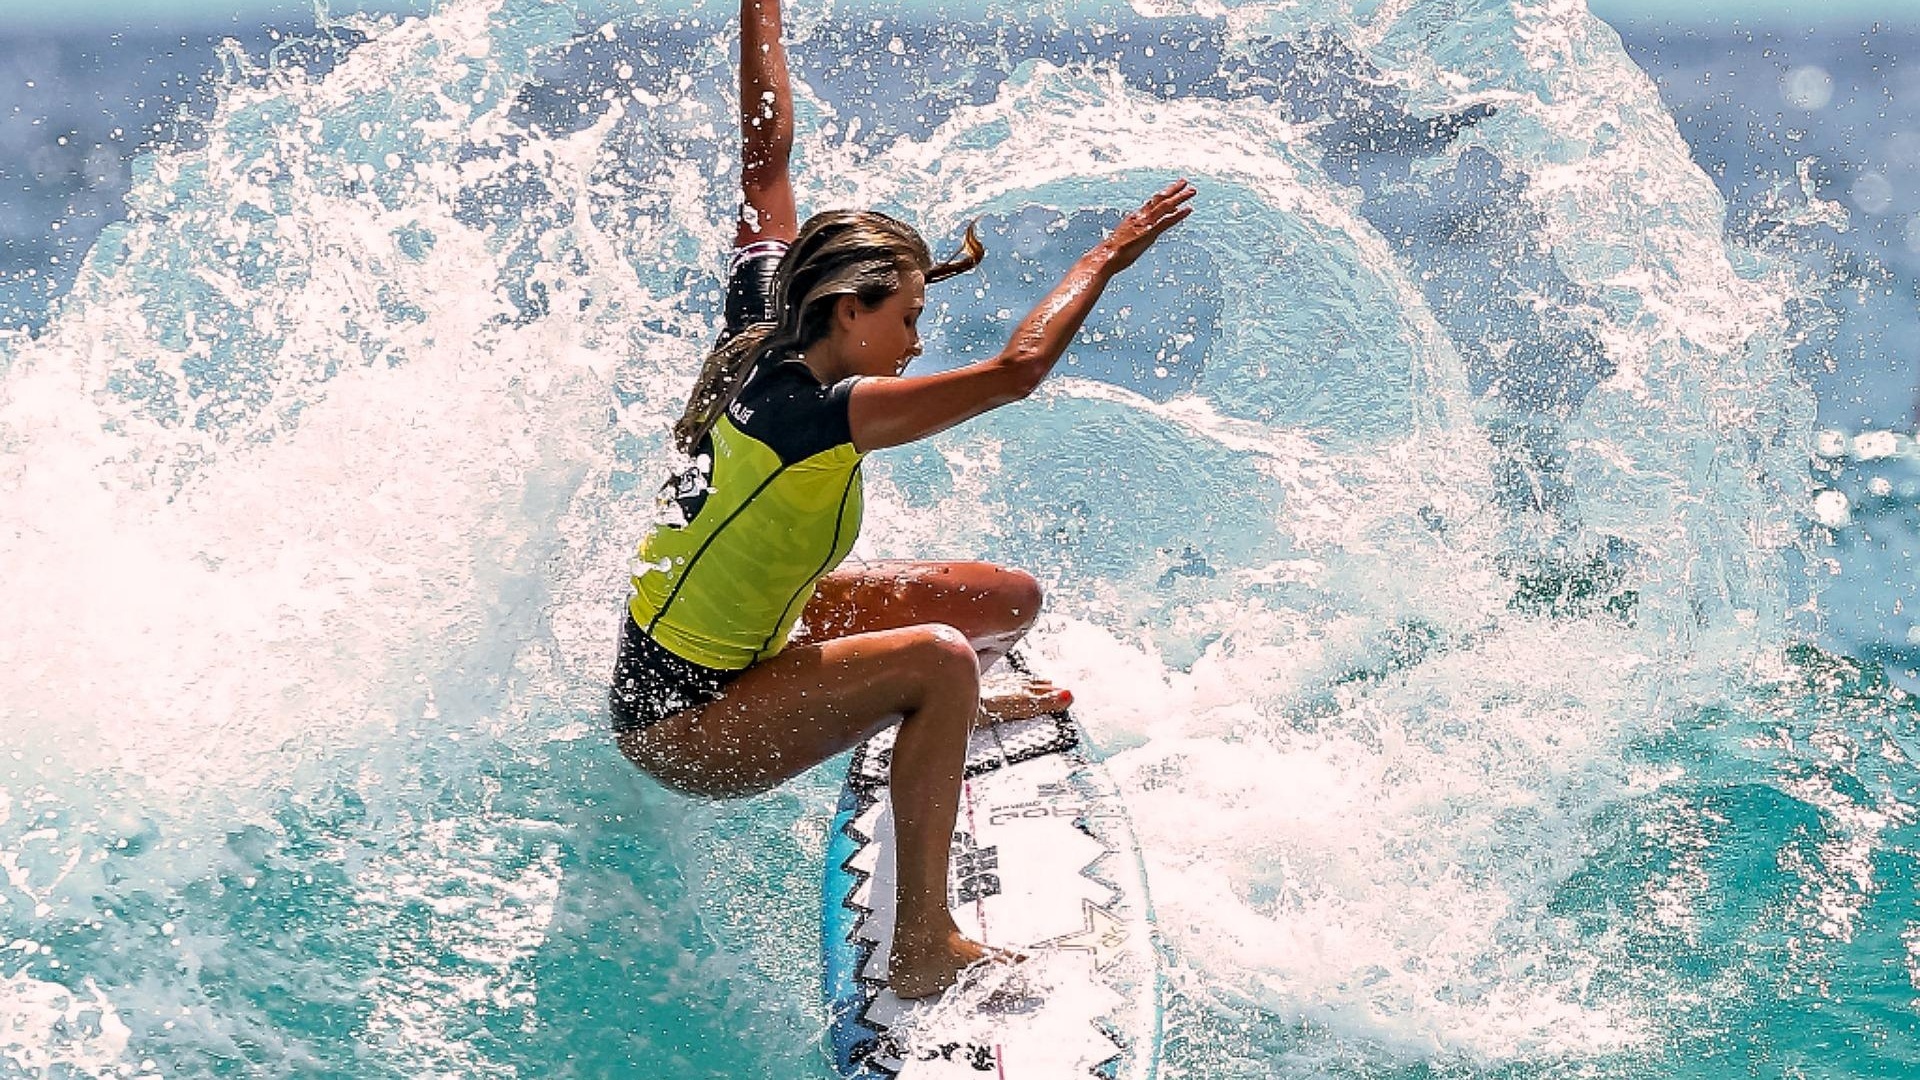 Motivational Surfer Surfing Water Splashing